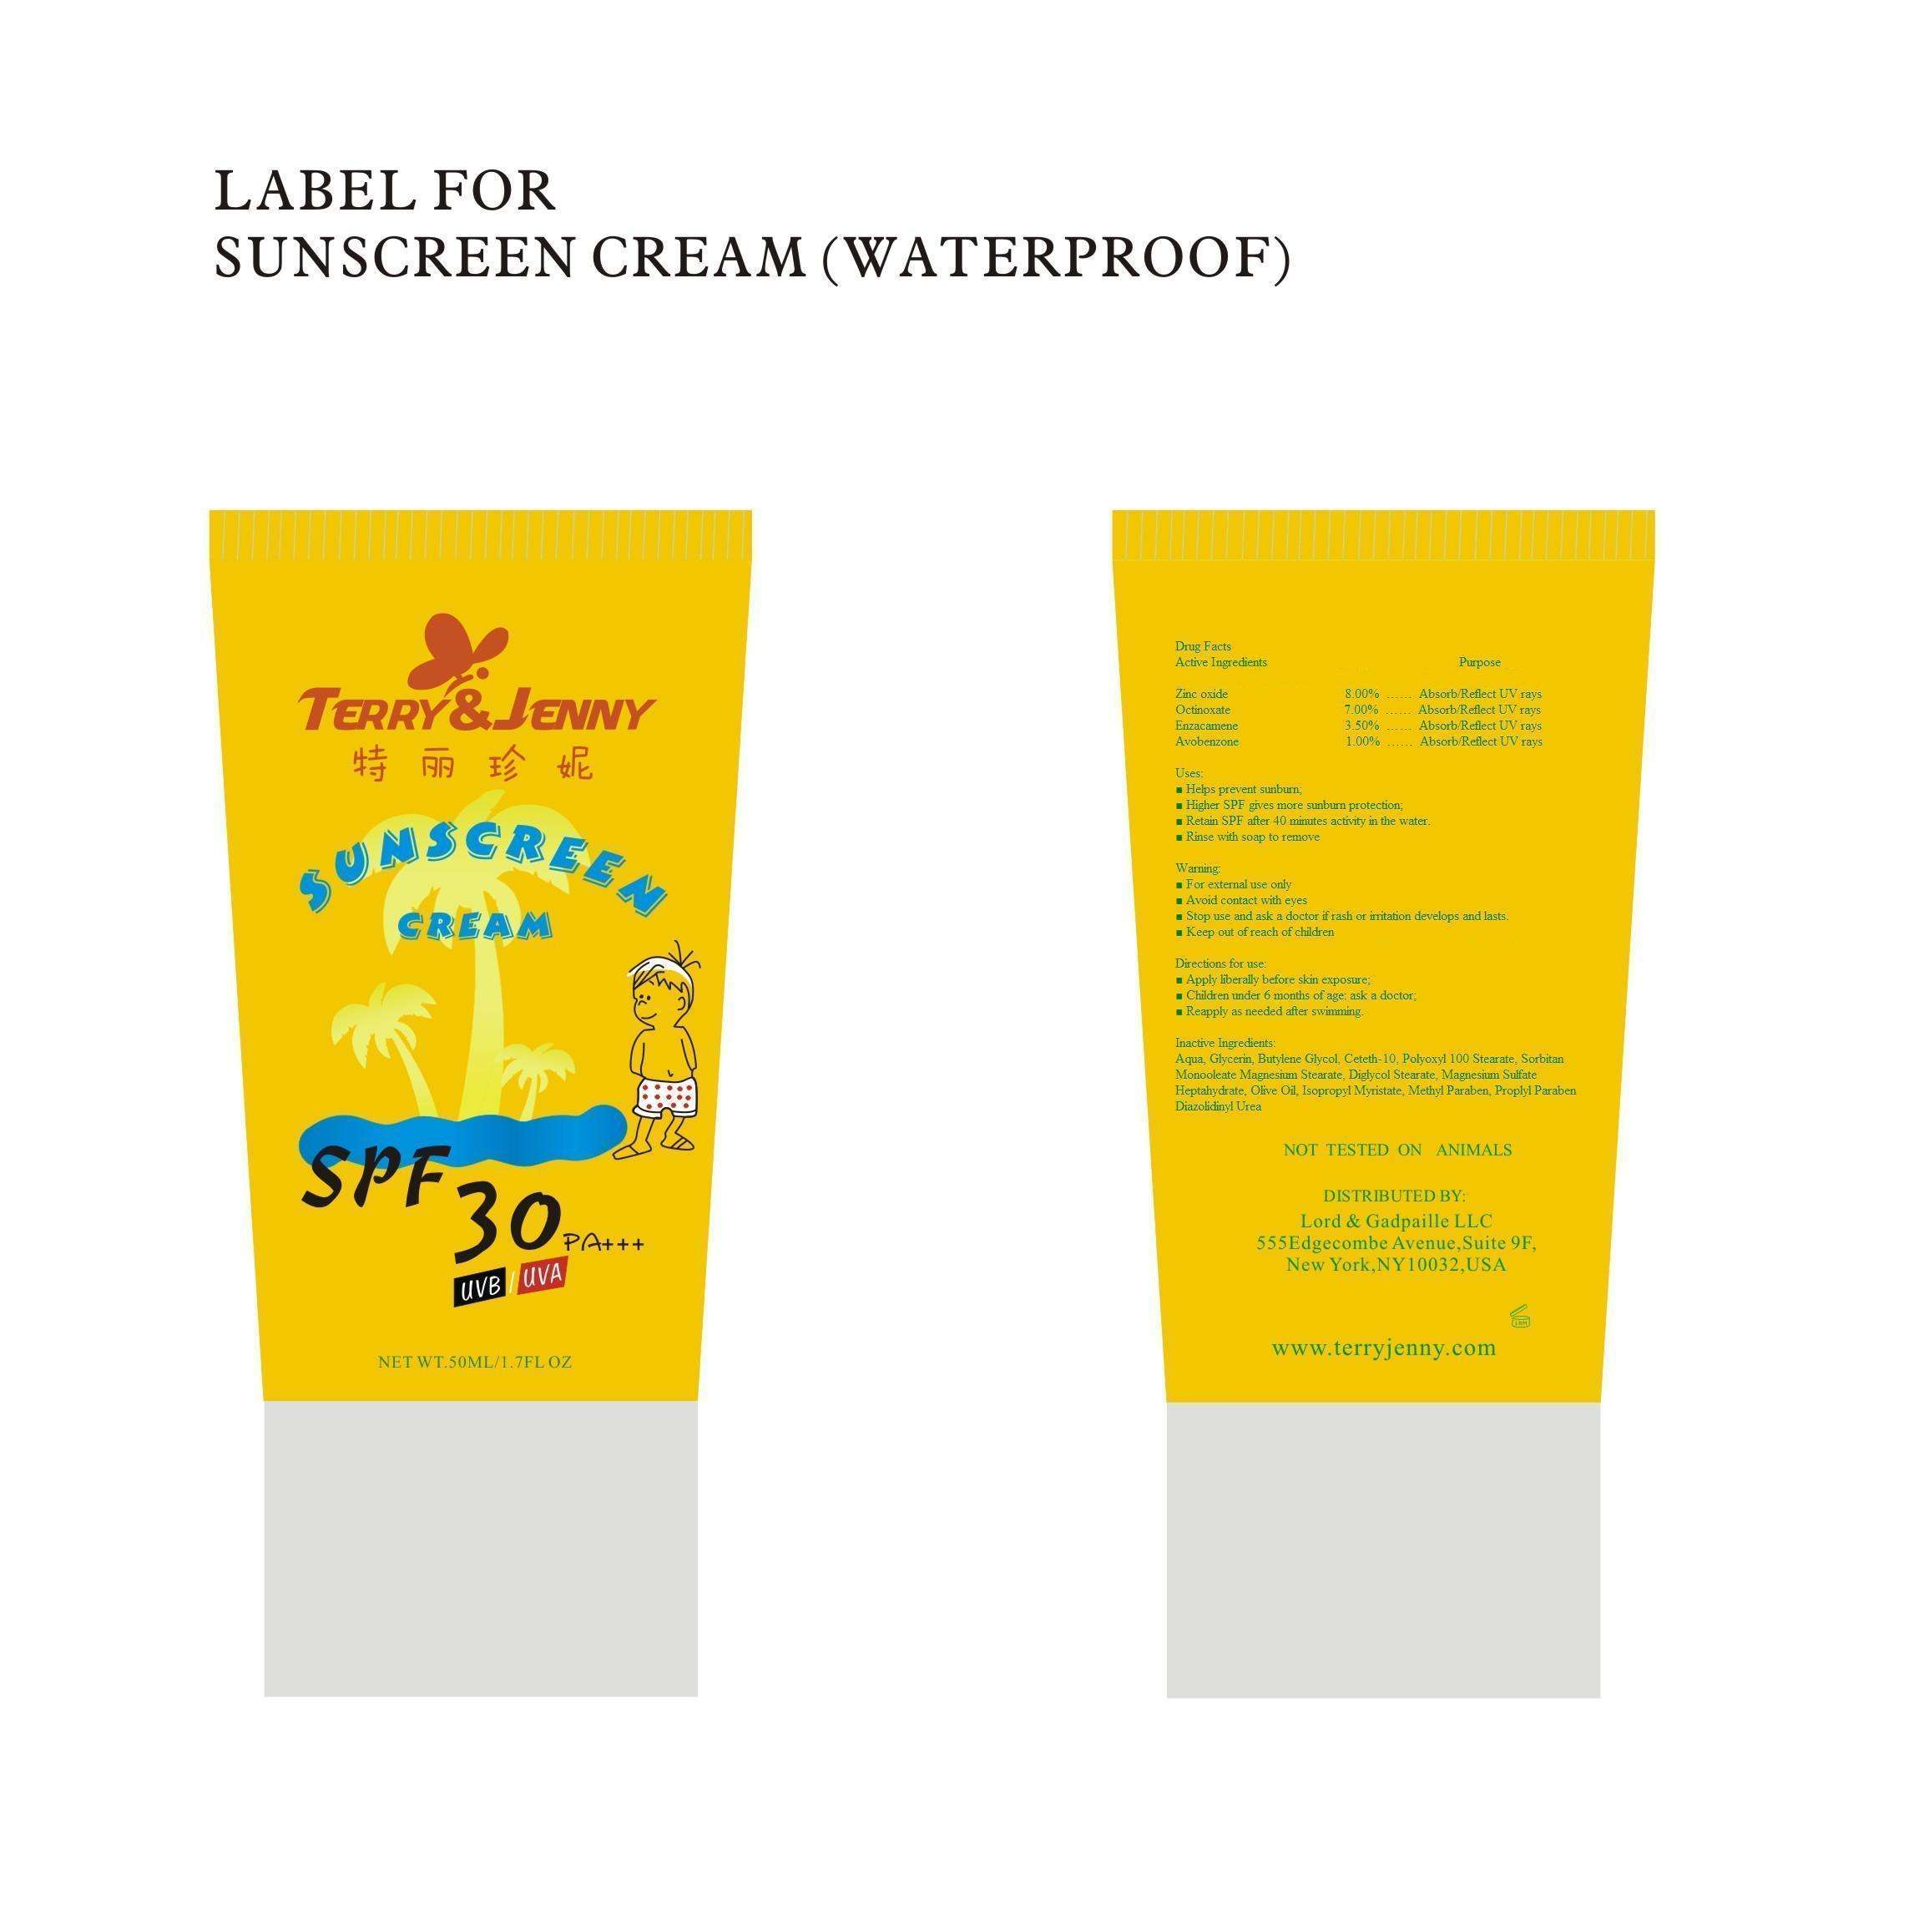 Correway Sunscreen (Waterproof)